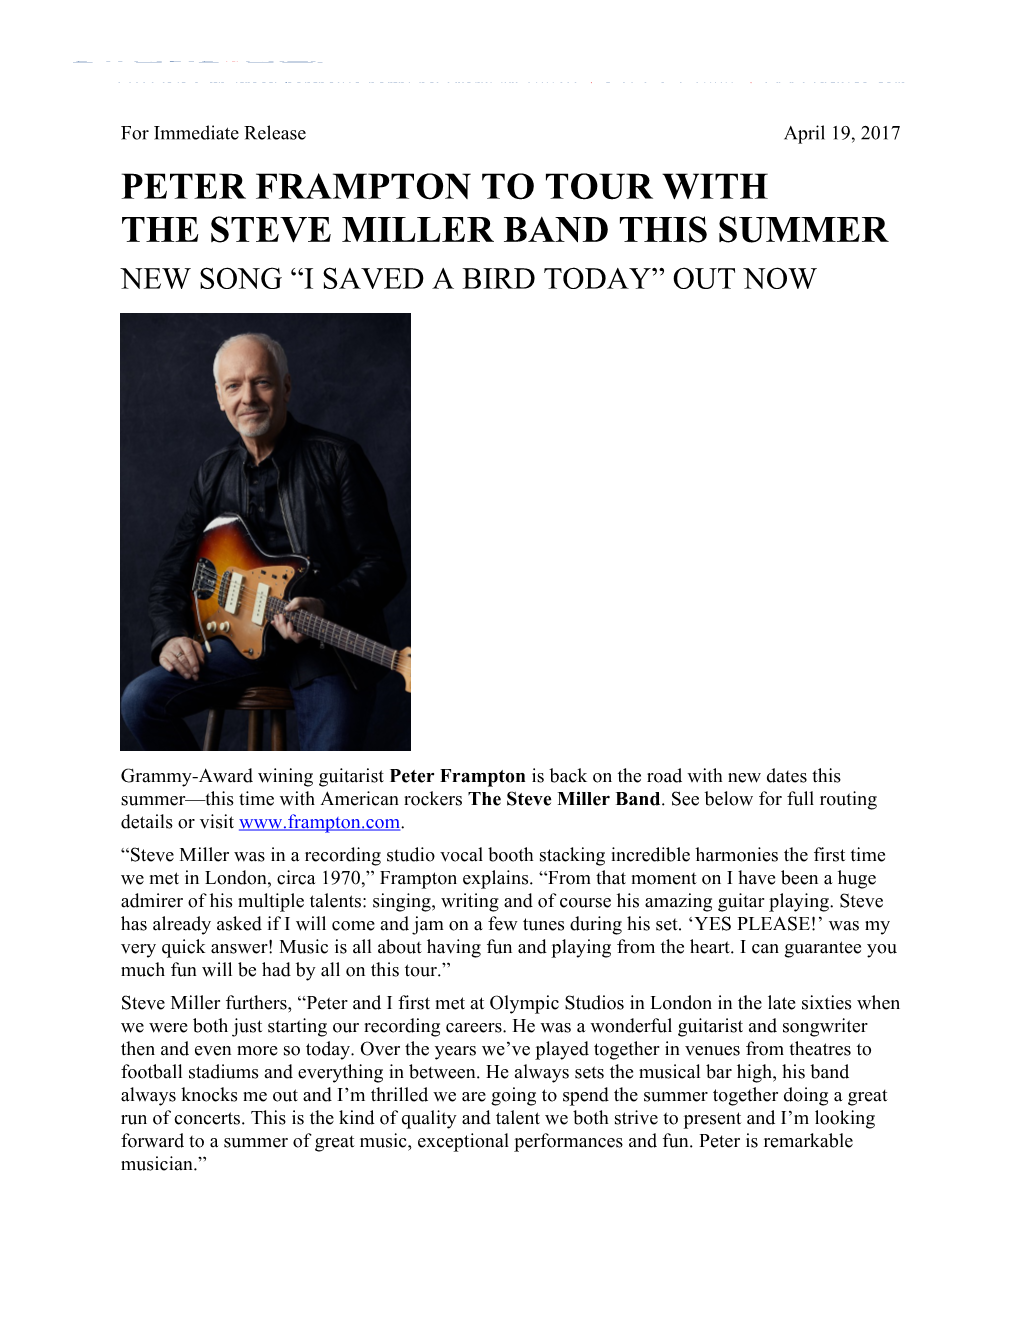 Peter Frampton to Tour With